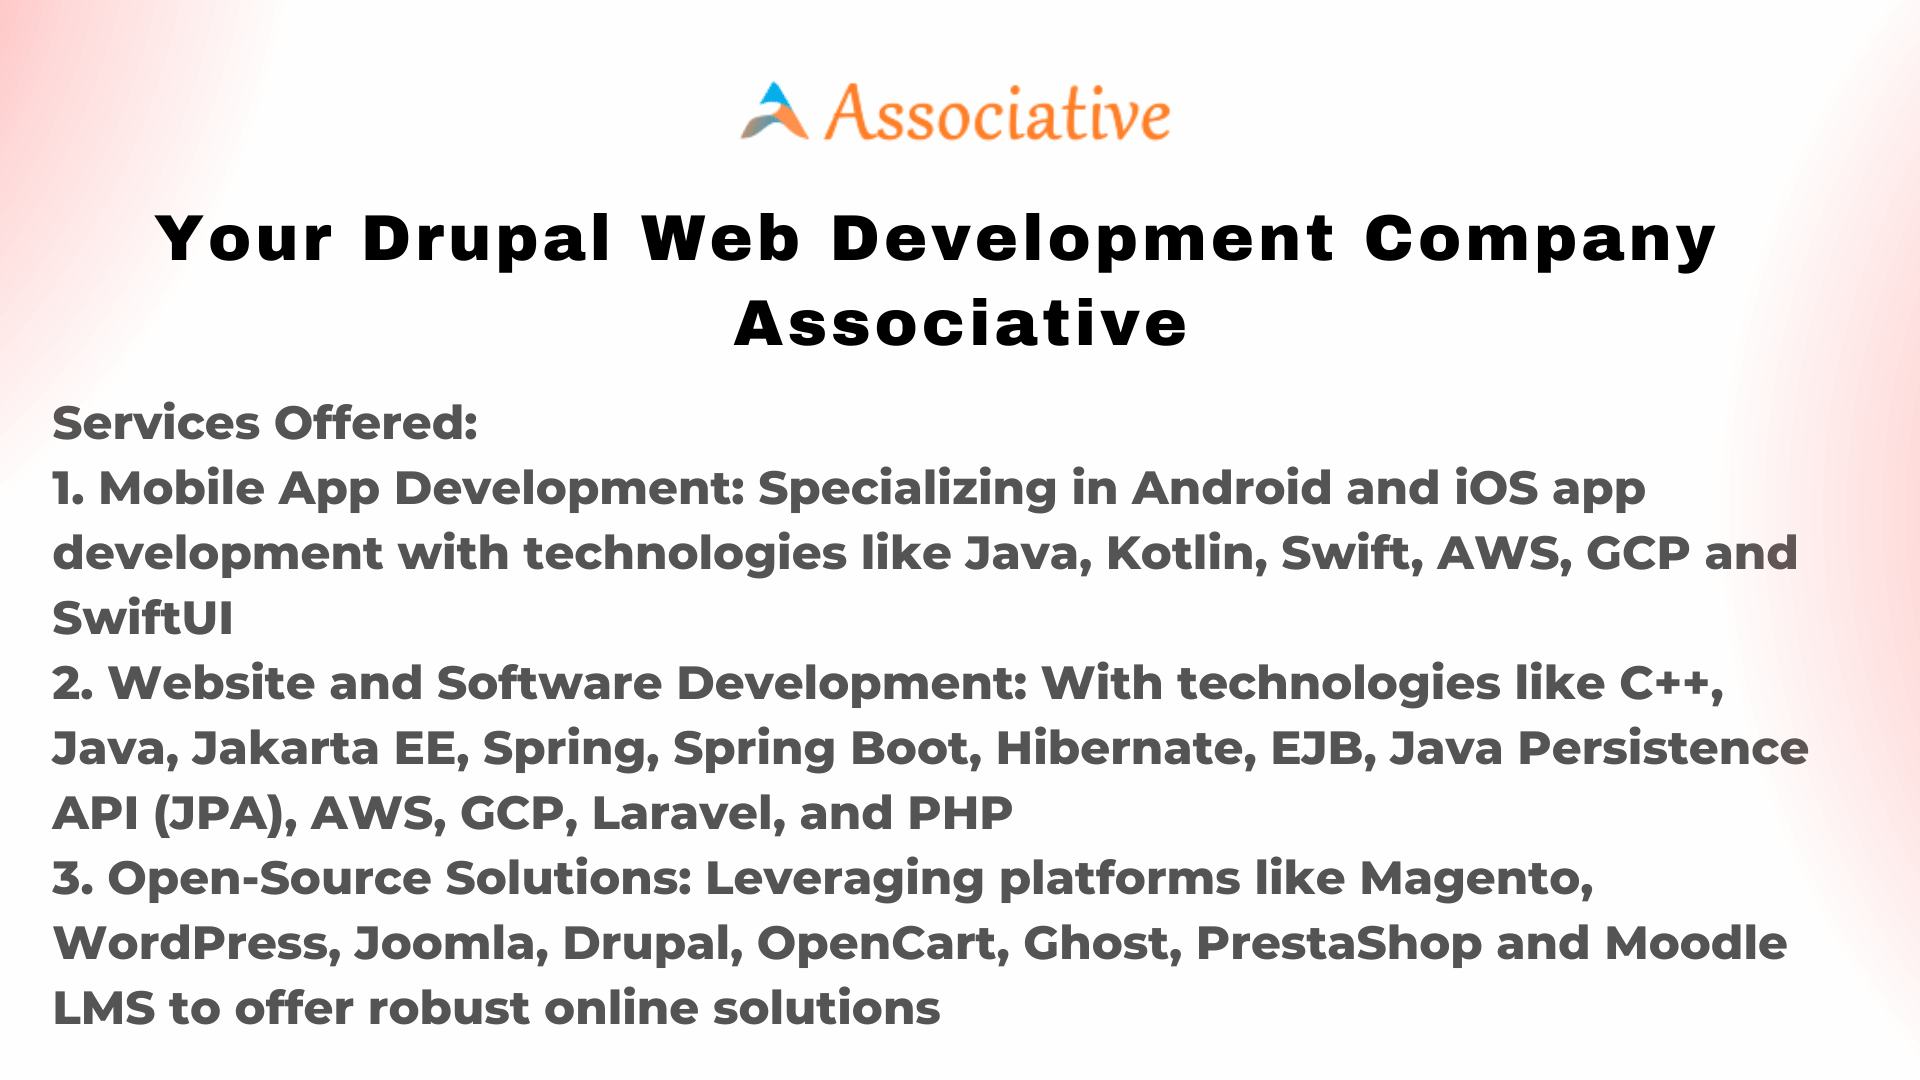 Your Drupal Web Development Company Associative